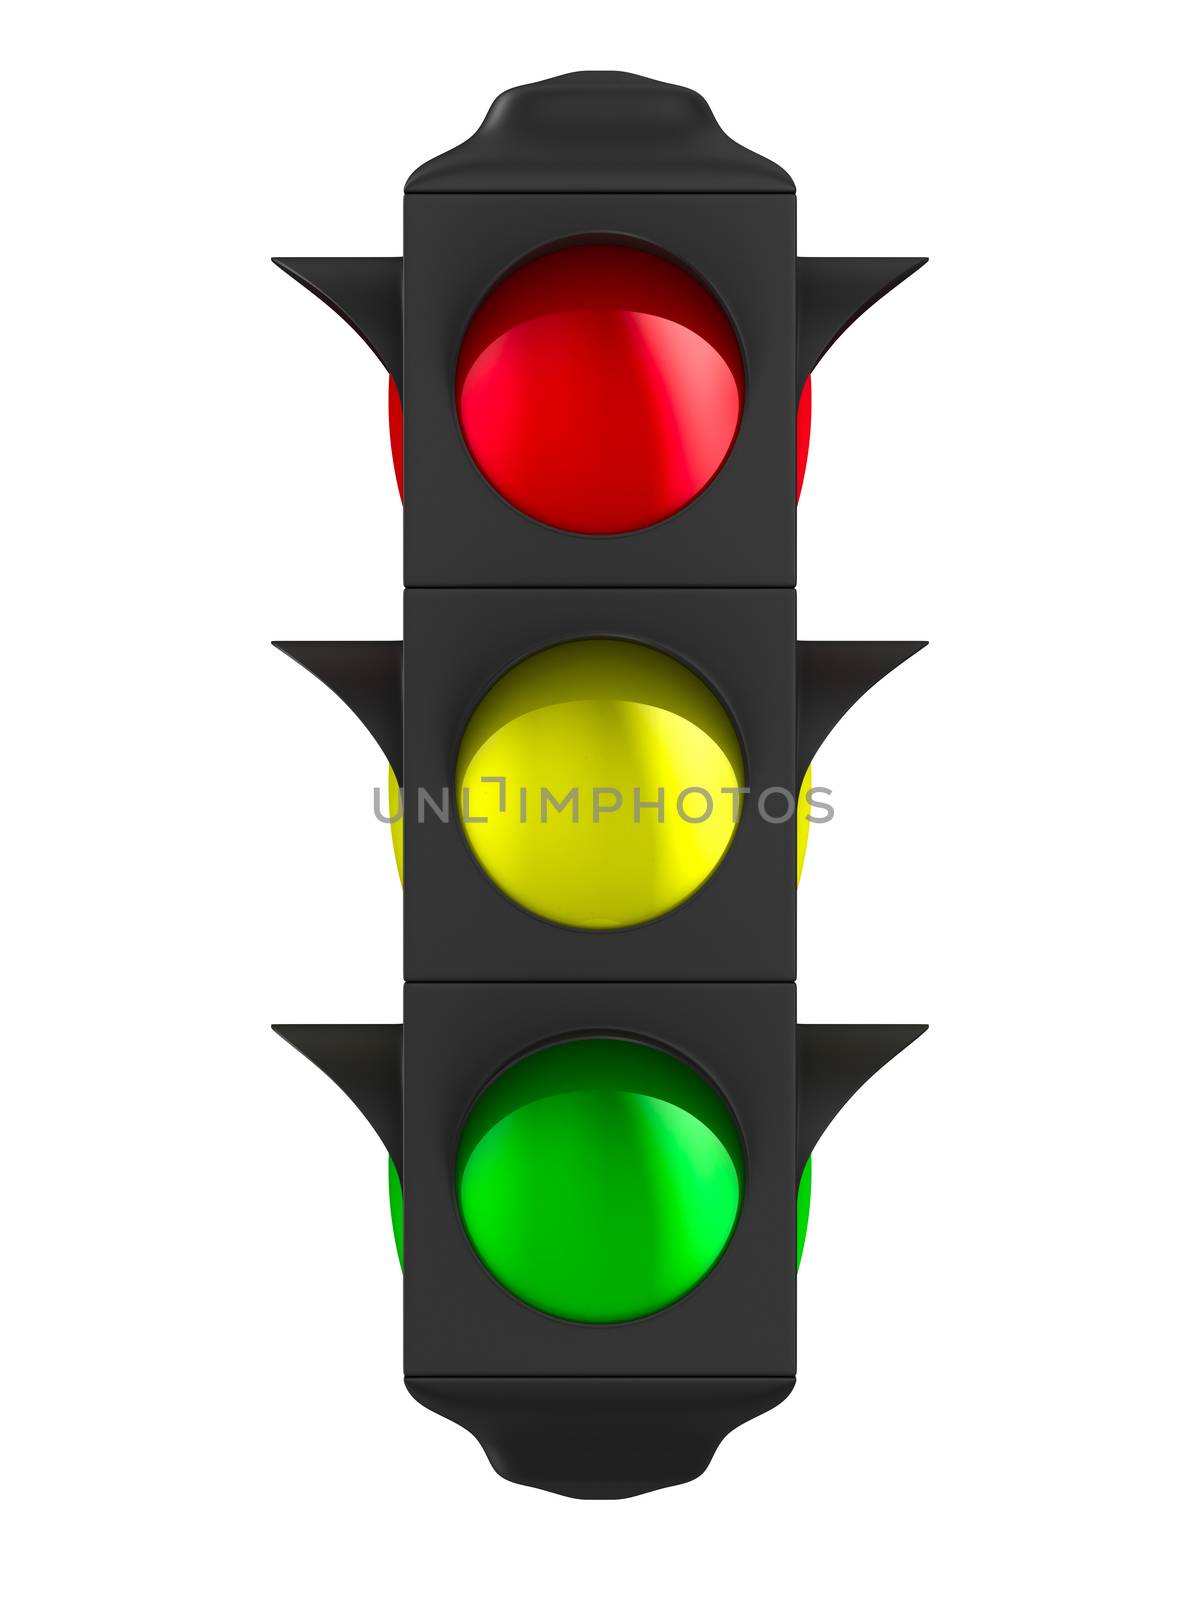 traffic light on white background. Isolated 3D image